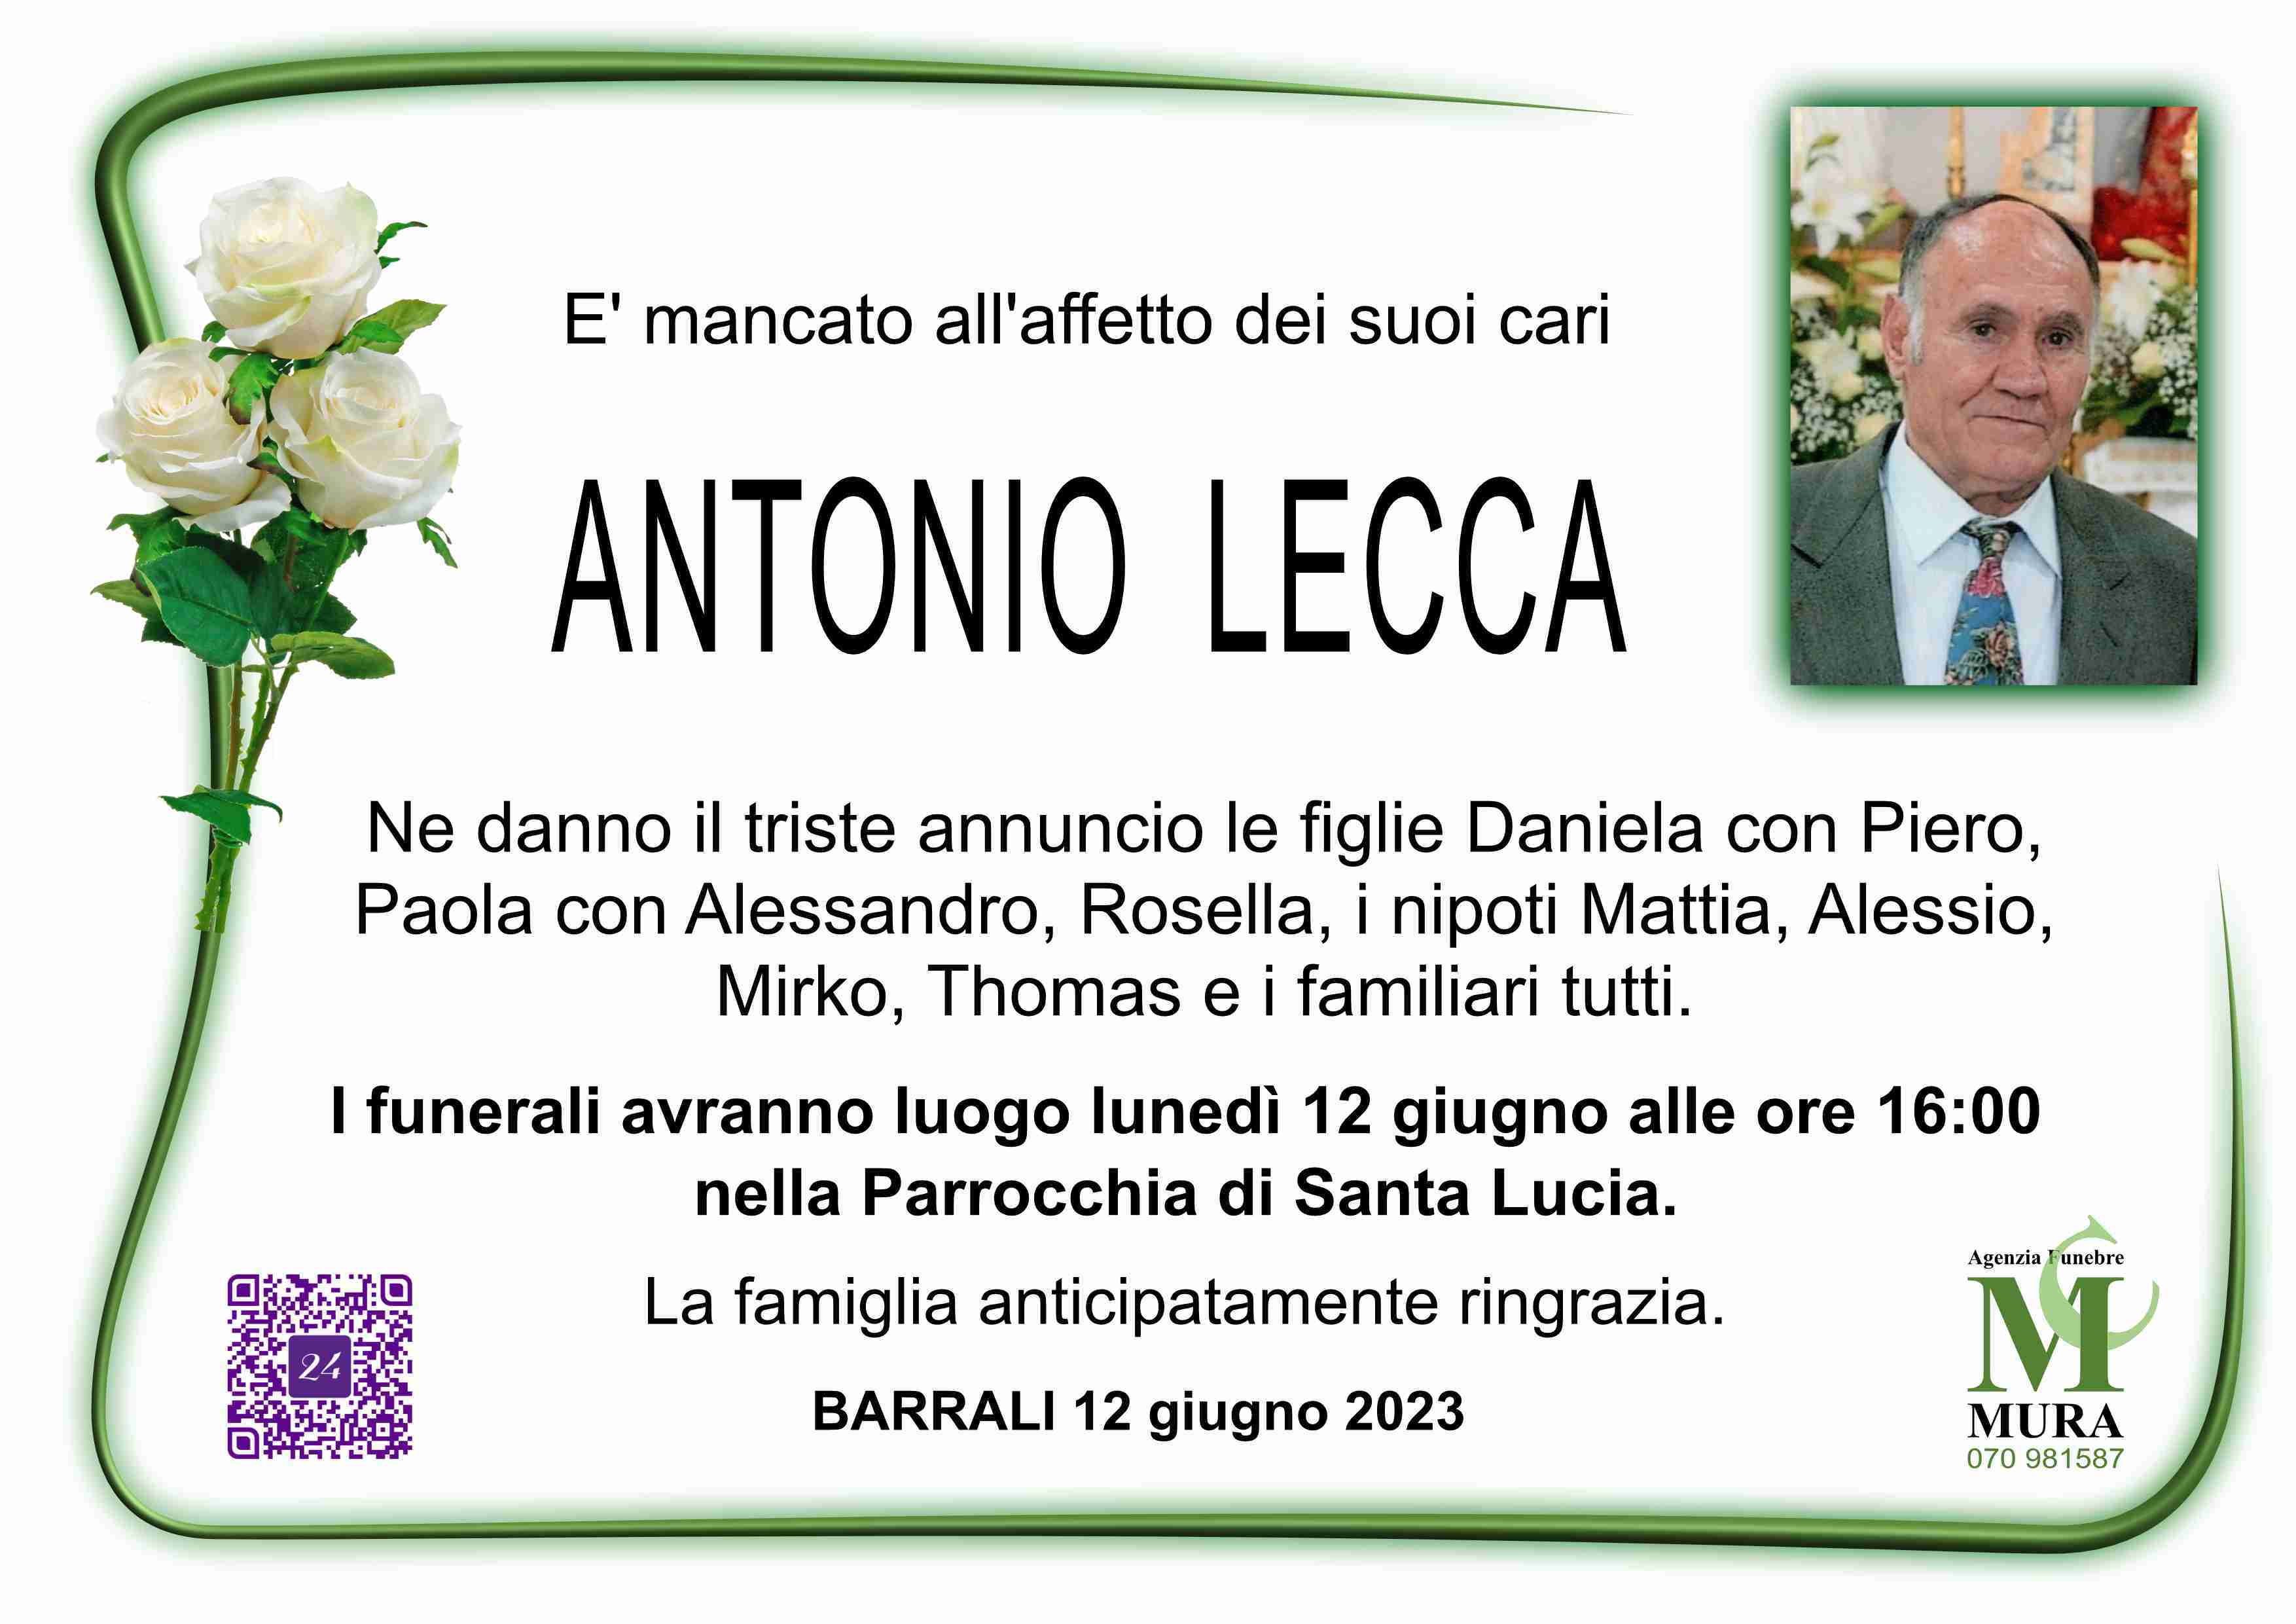 Antonio Lecca